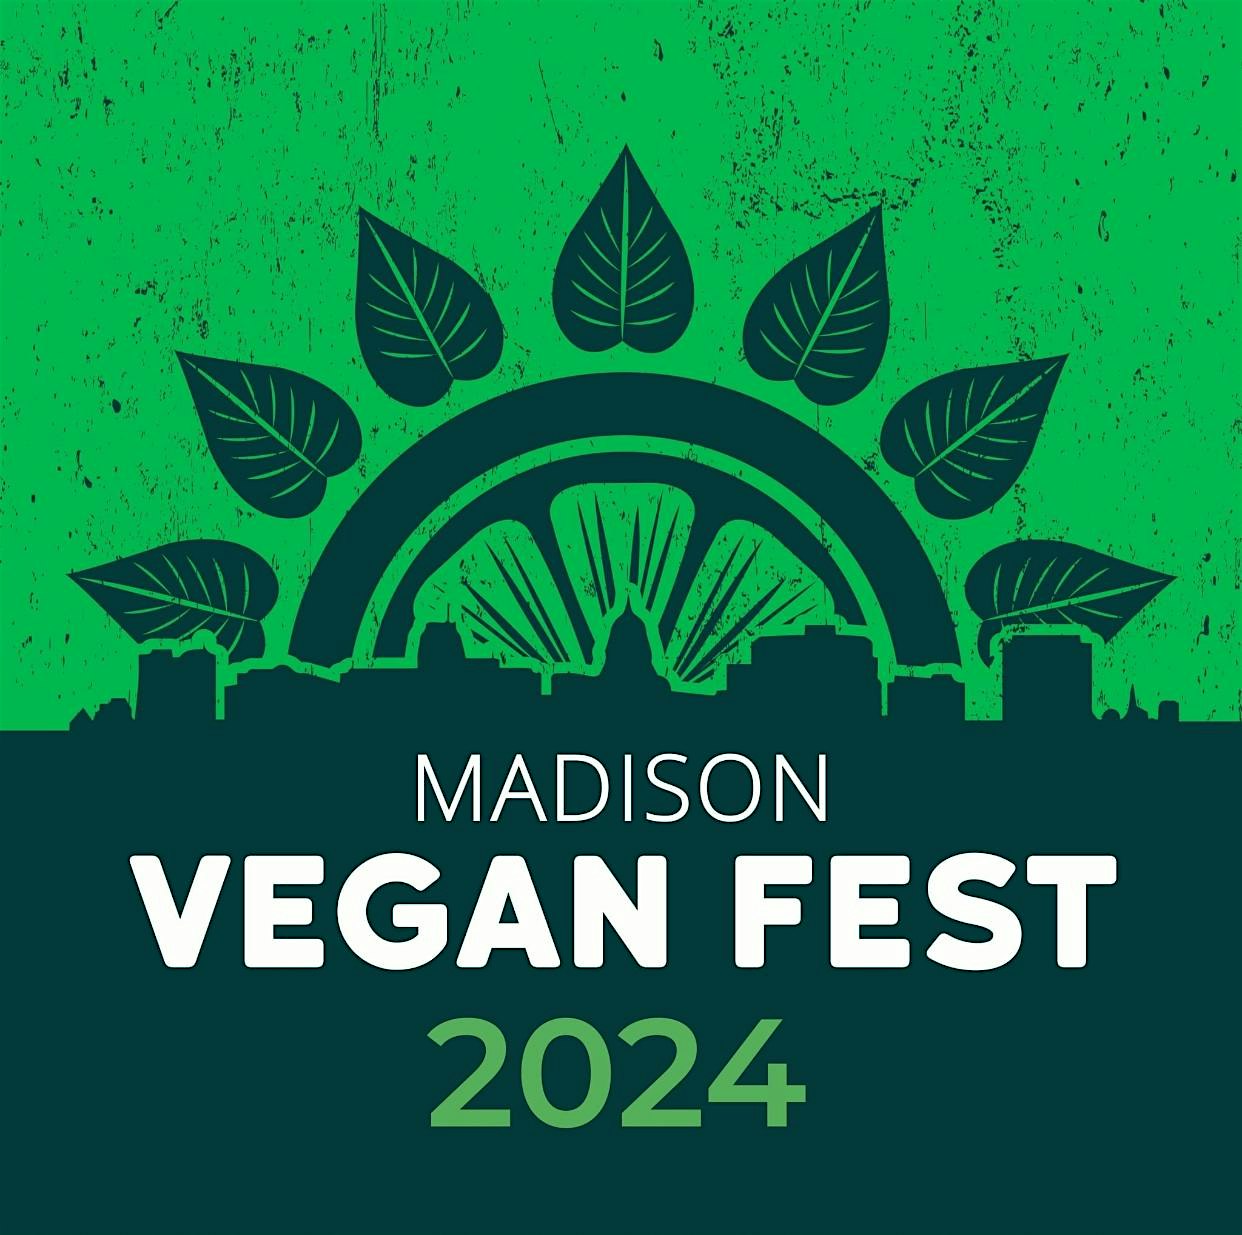 Madison Vegan Fest